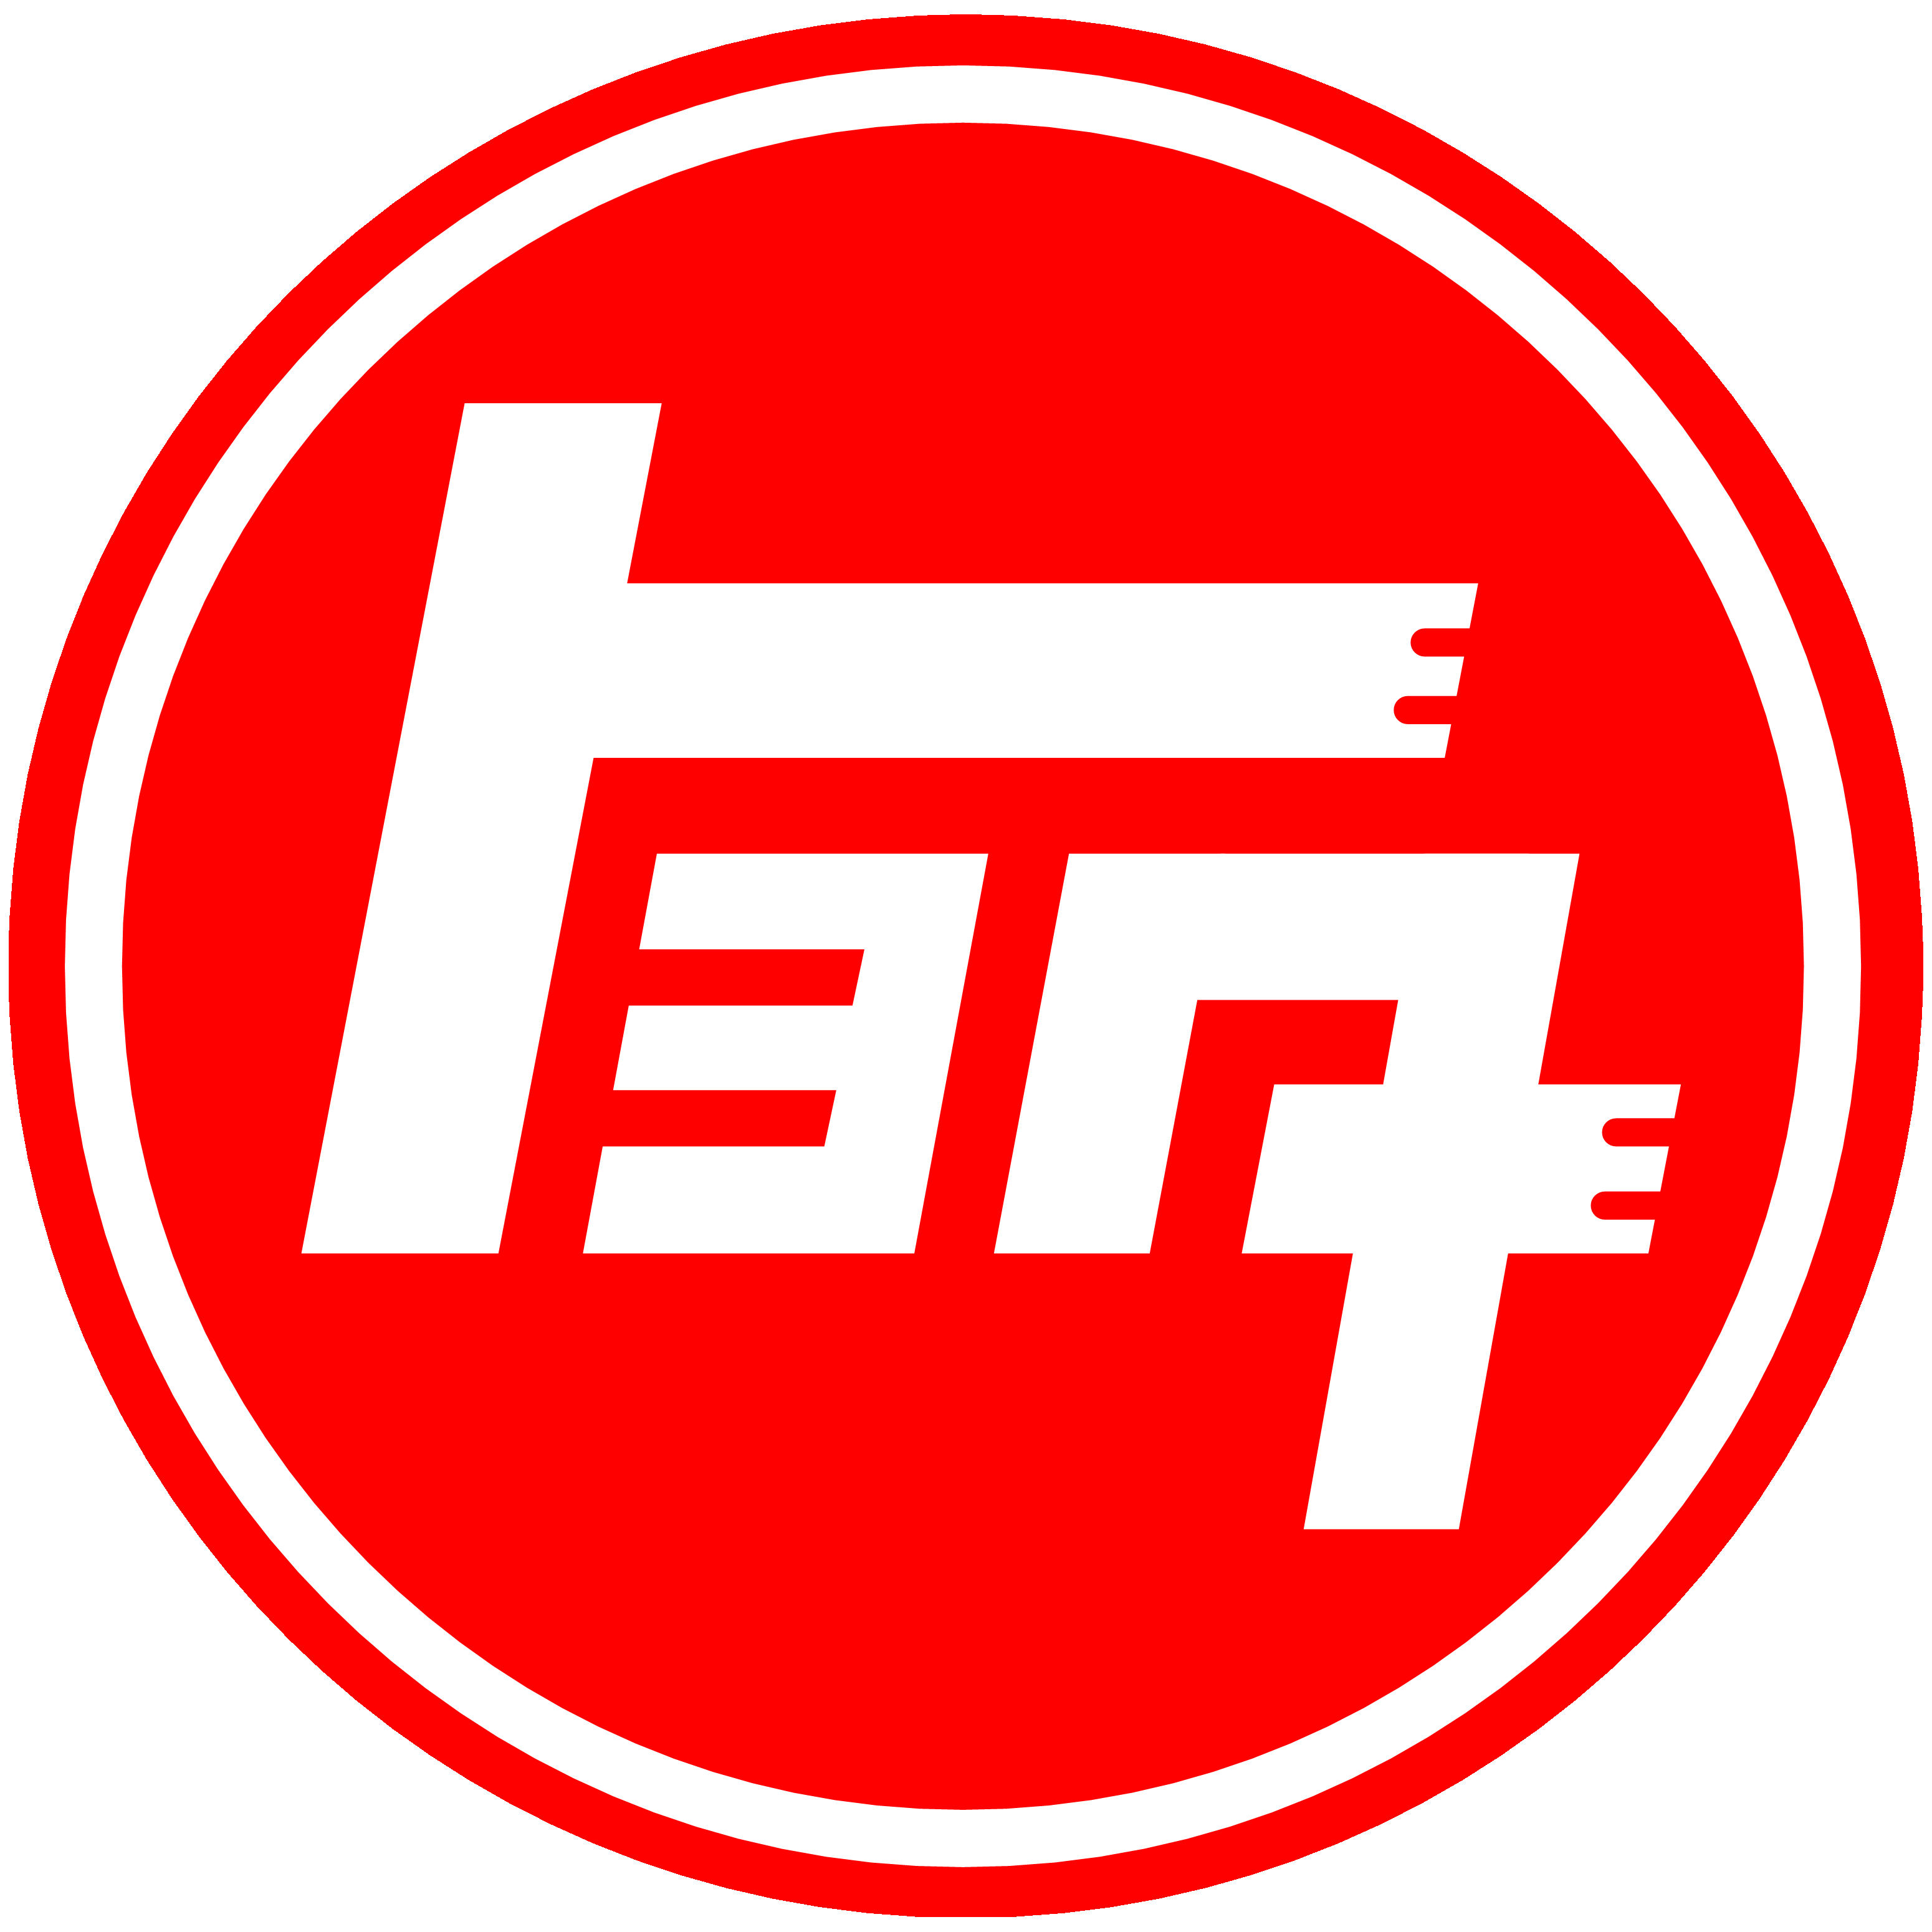 AE86 Toyota Logo - Pin by Johnny Elf on Automobile Logos | Cars, Toyota cars, Logos